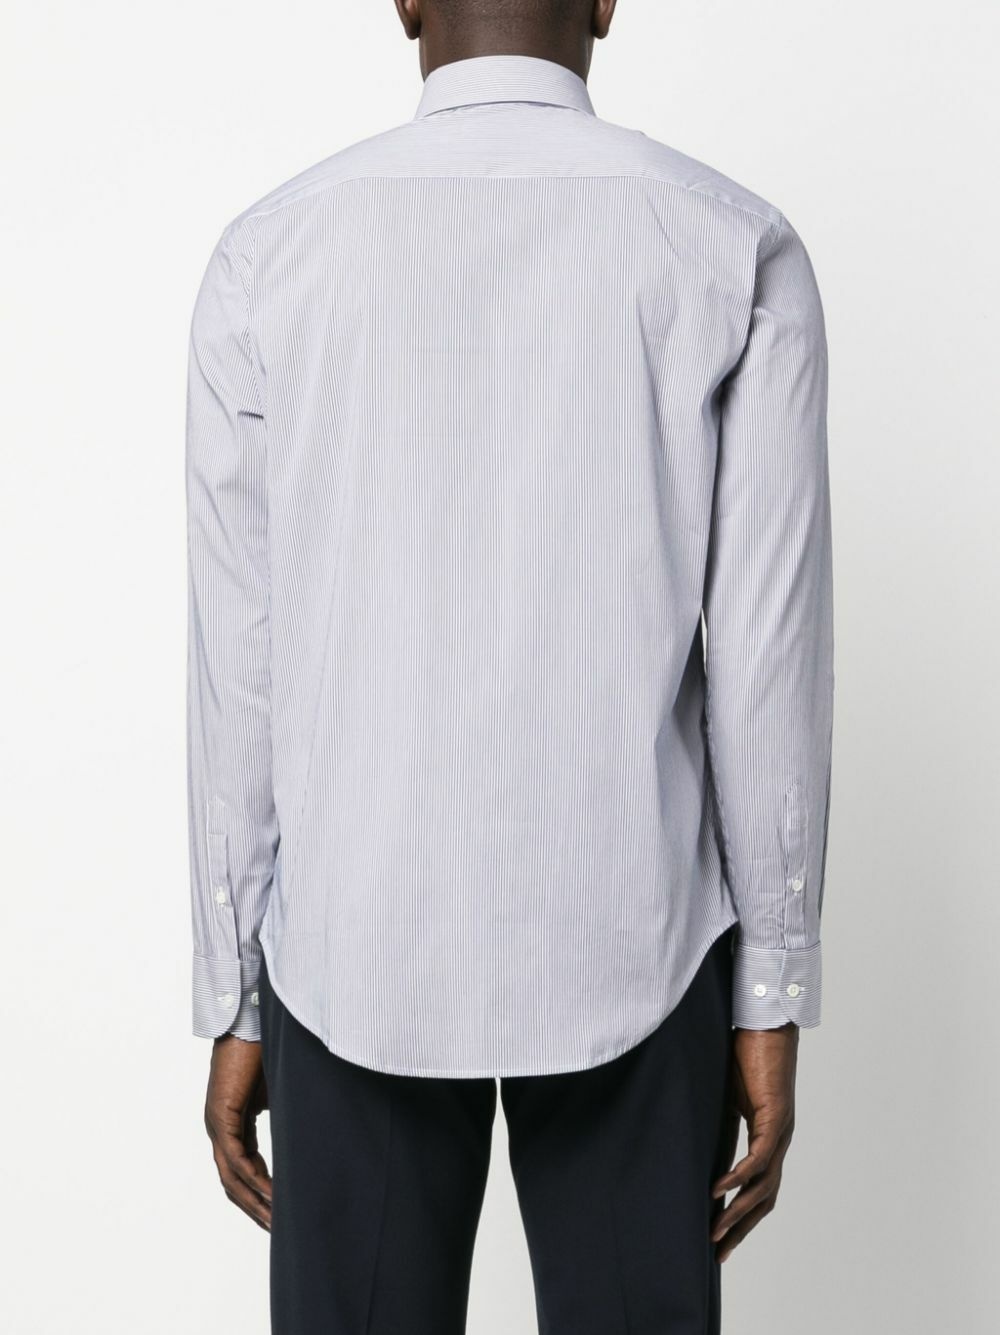 EMPORIO ARMANI - Striped Cotton Shirt